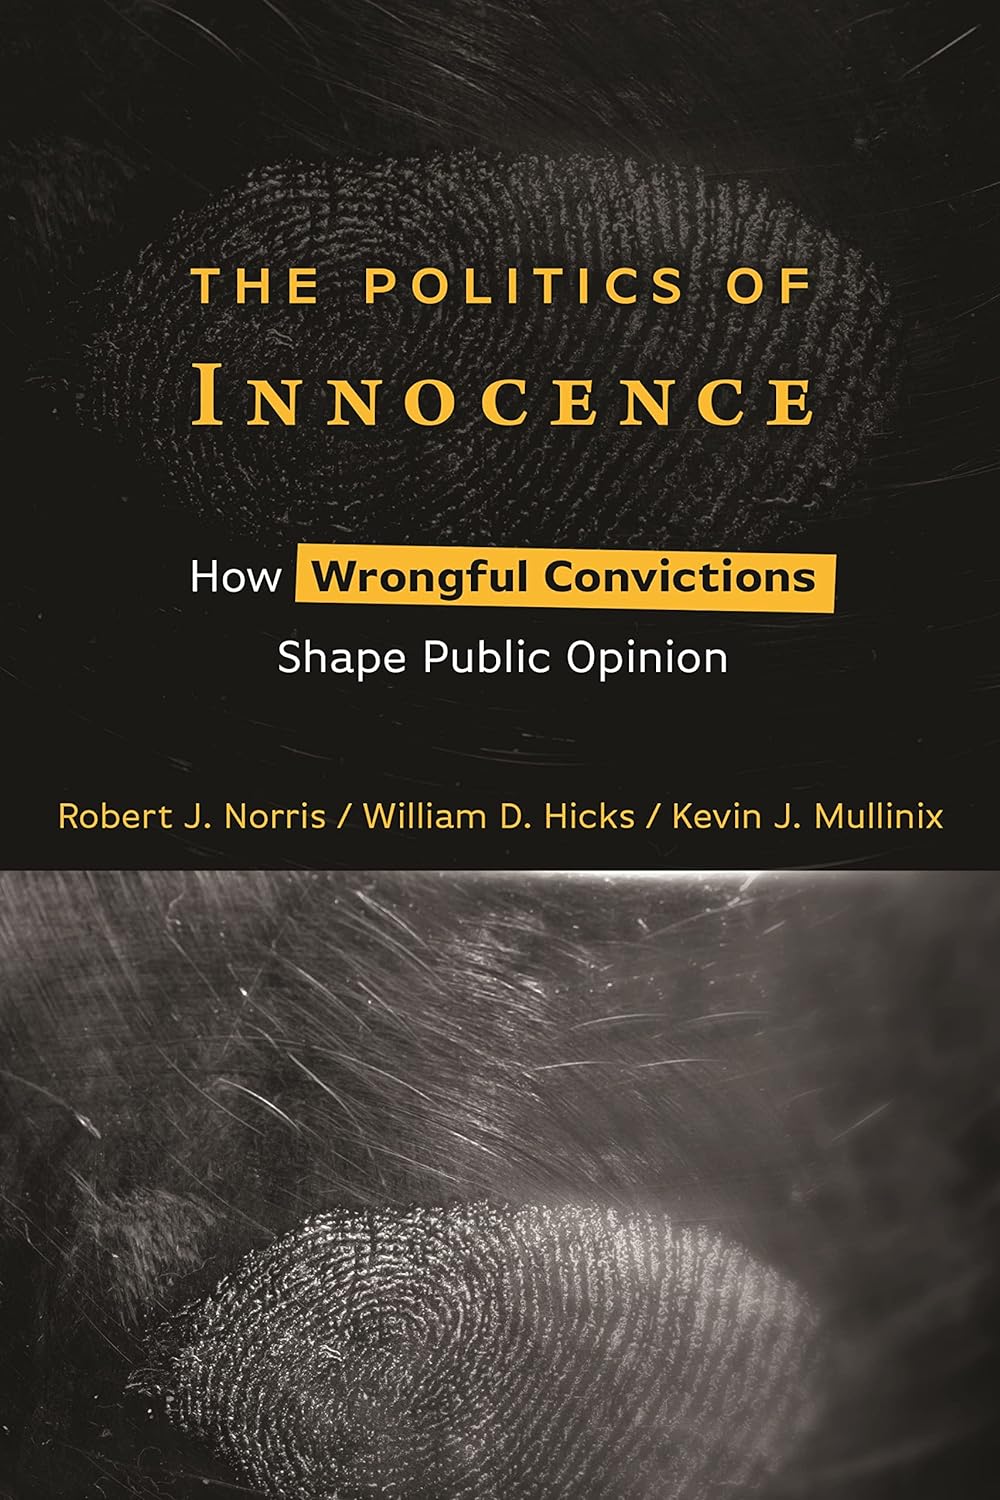 'The Politics of Innocence' book co-written by KU professor Kevin Mullinix